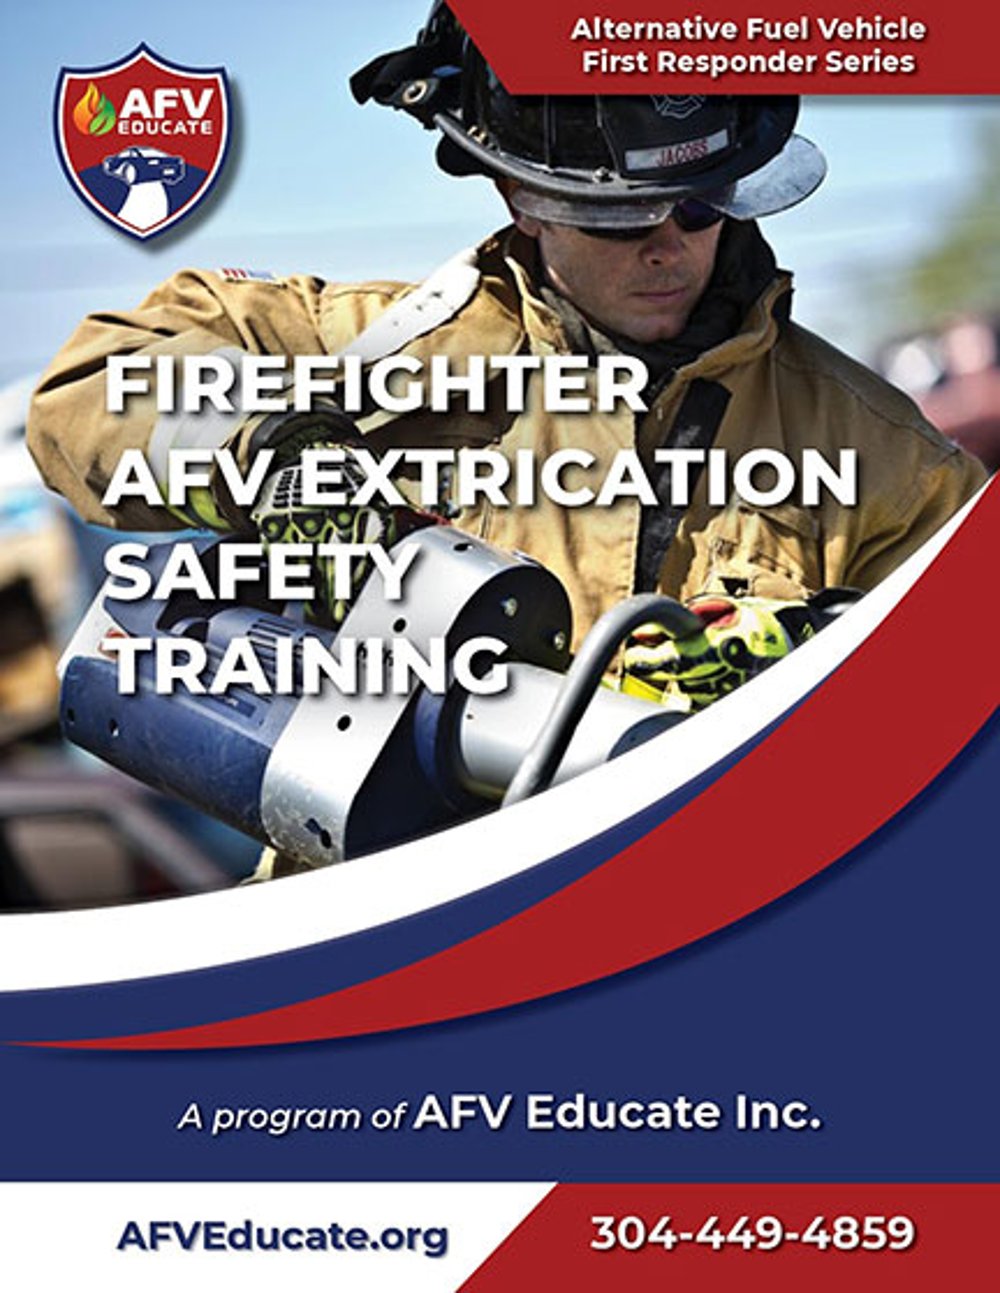 AFV Educate Firefighter AFV Extrication Safety Training